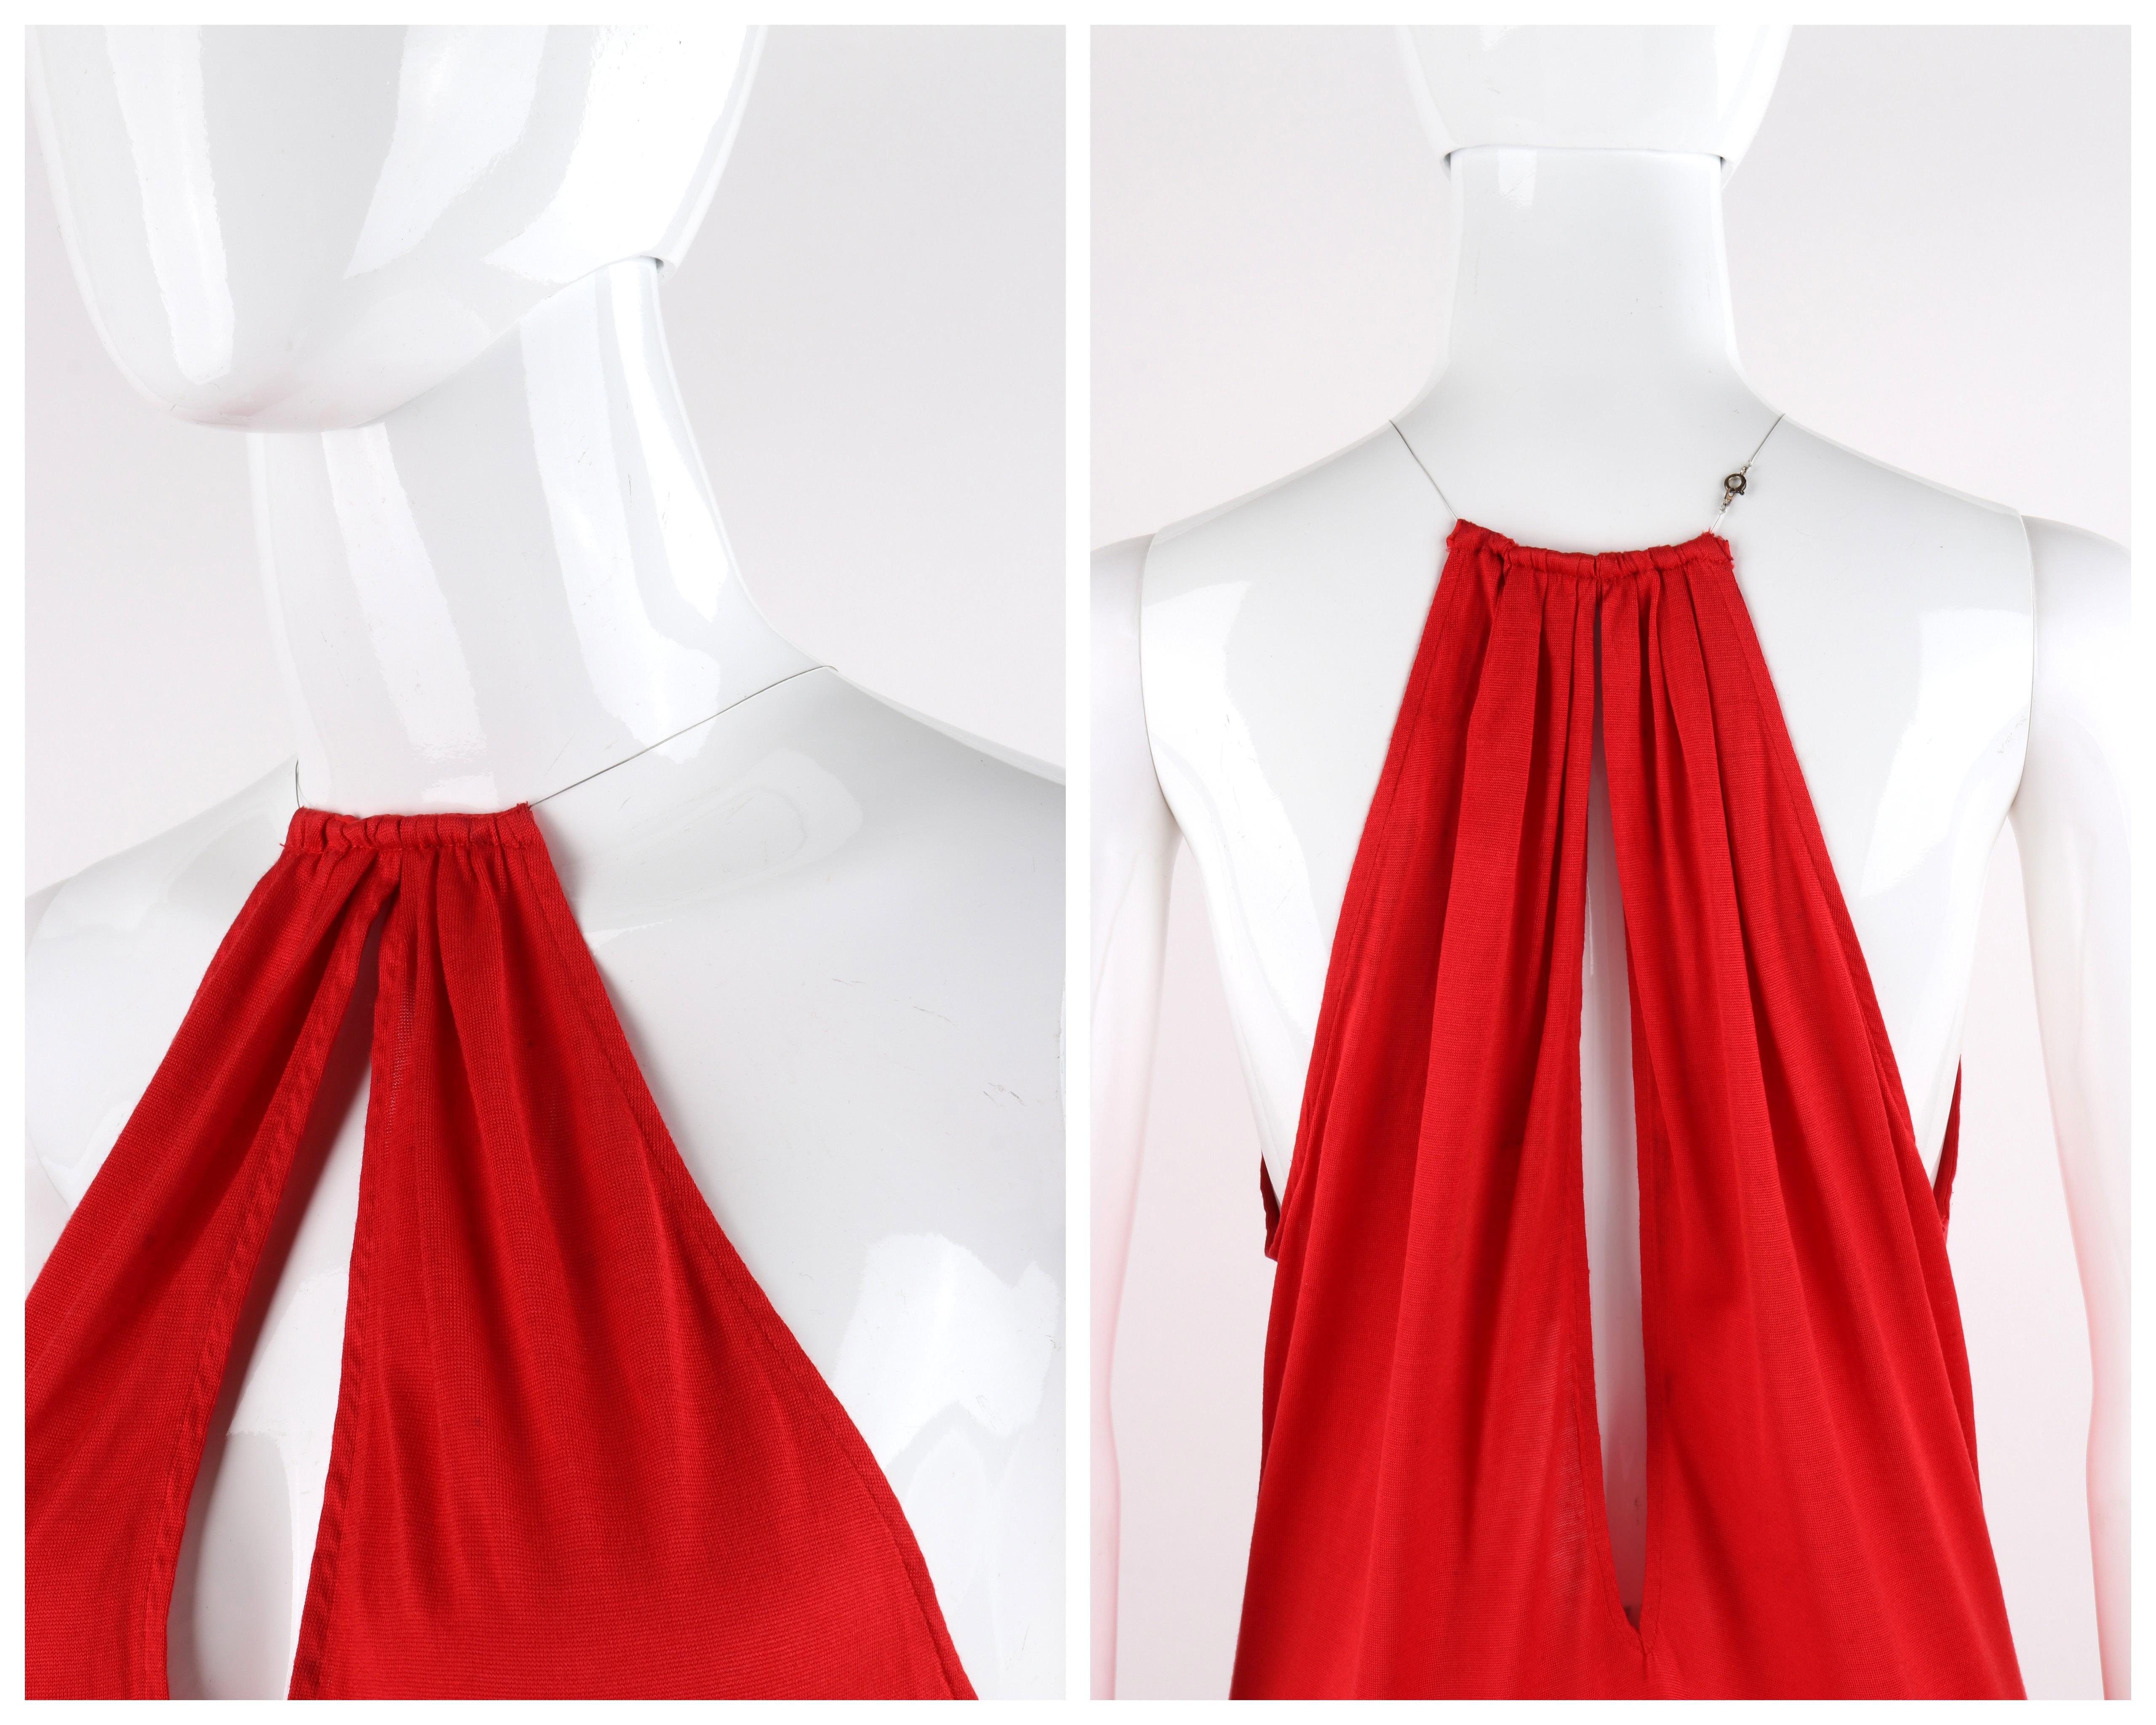 ALEXANDER McQUEEN S/S 2001 “Eye” Red Keyhole Cutout Wire Choker Halter Top Dress For Sale 2